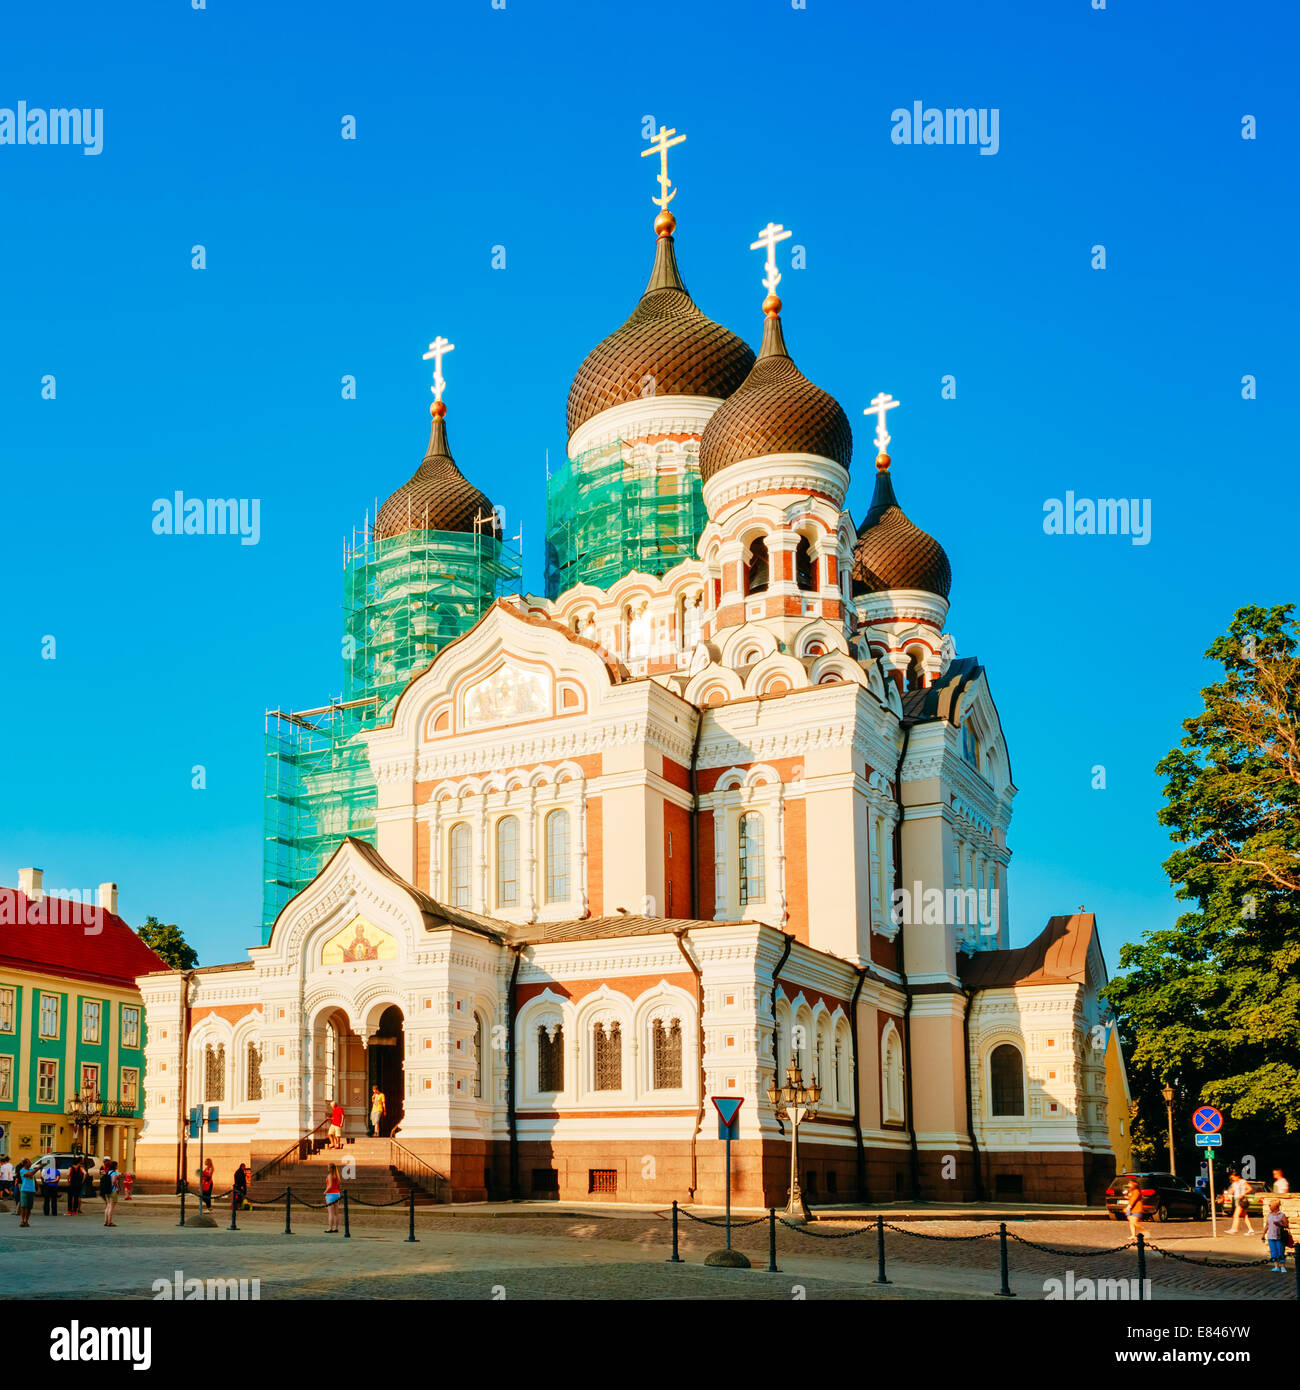 La Catedral Alexander Nevsky, la Iglesia Catedral Ortodoxa en la ciudad vieja de Tallinn, Estonia. Horario de verano Foto de stock